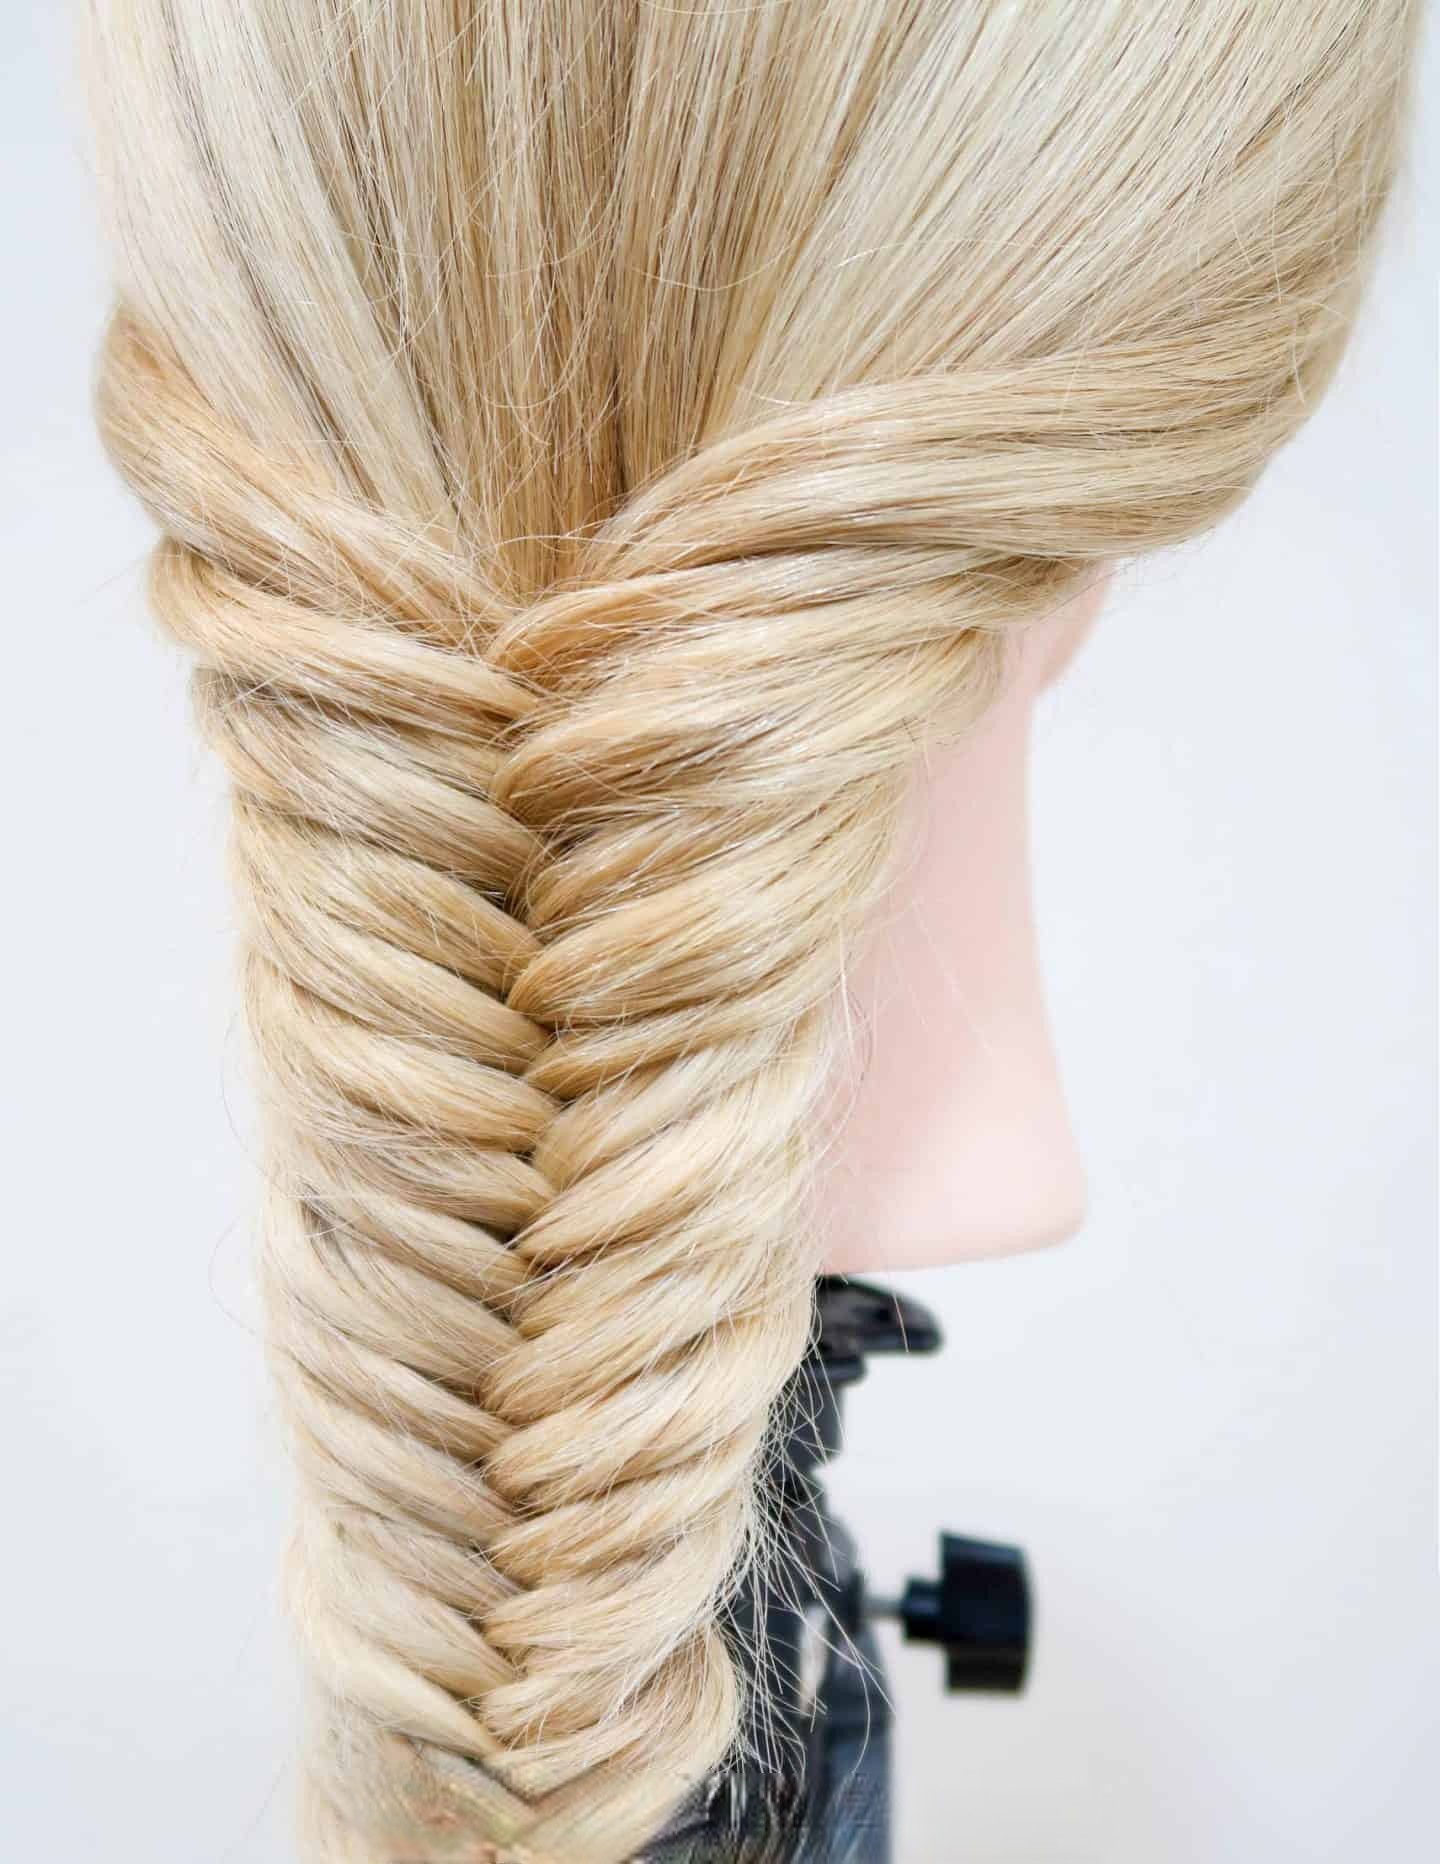 Fishtail braids hairstyle